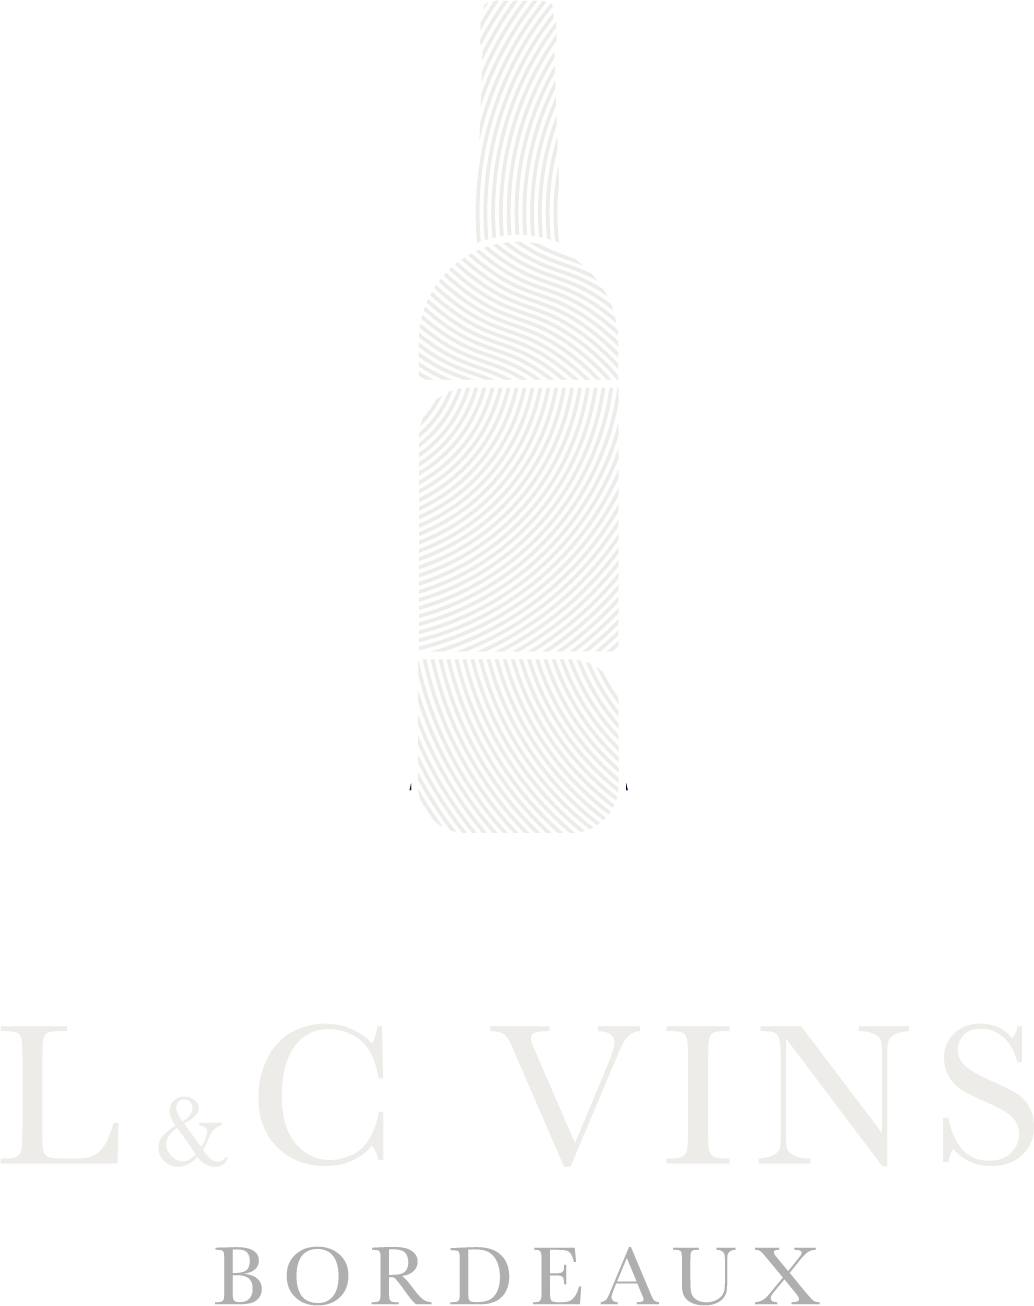 Logo of L&C Vins representing 3 bottle of wine